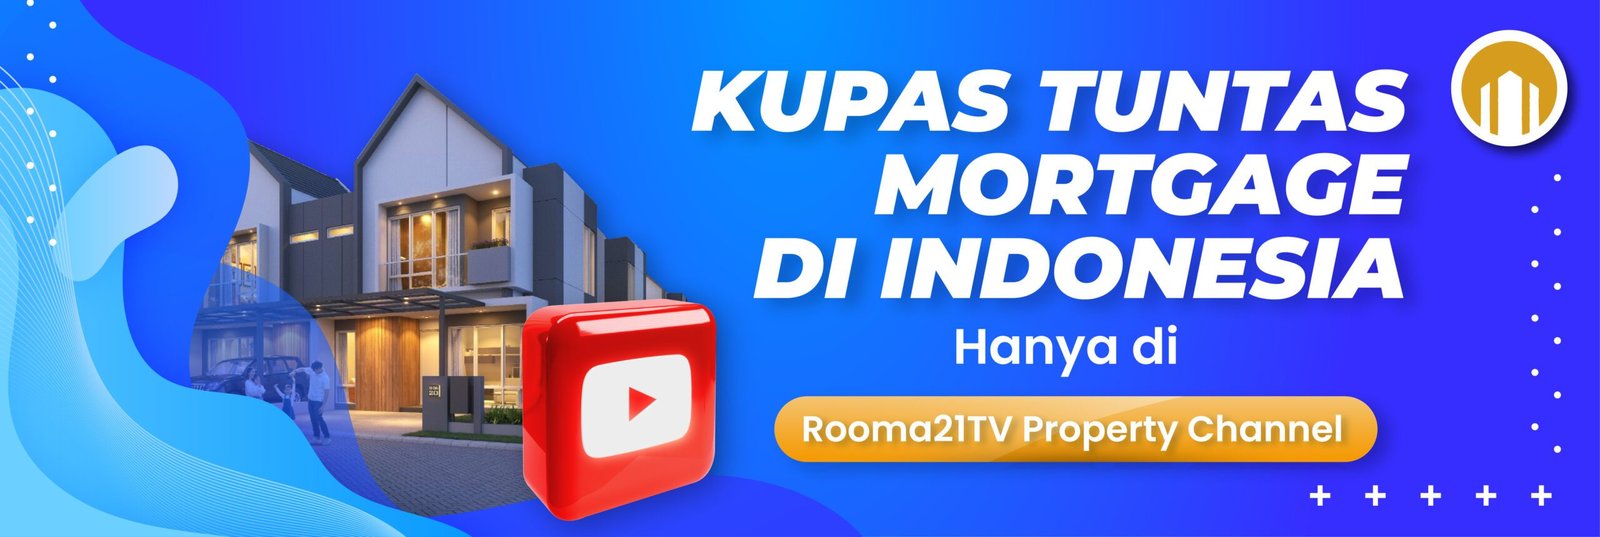 Kupas Tuntas Mortgage di Indonesia hanya di Rooma21TV Property Channel